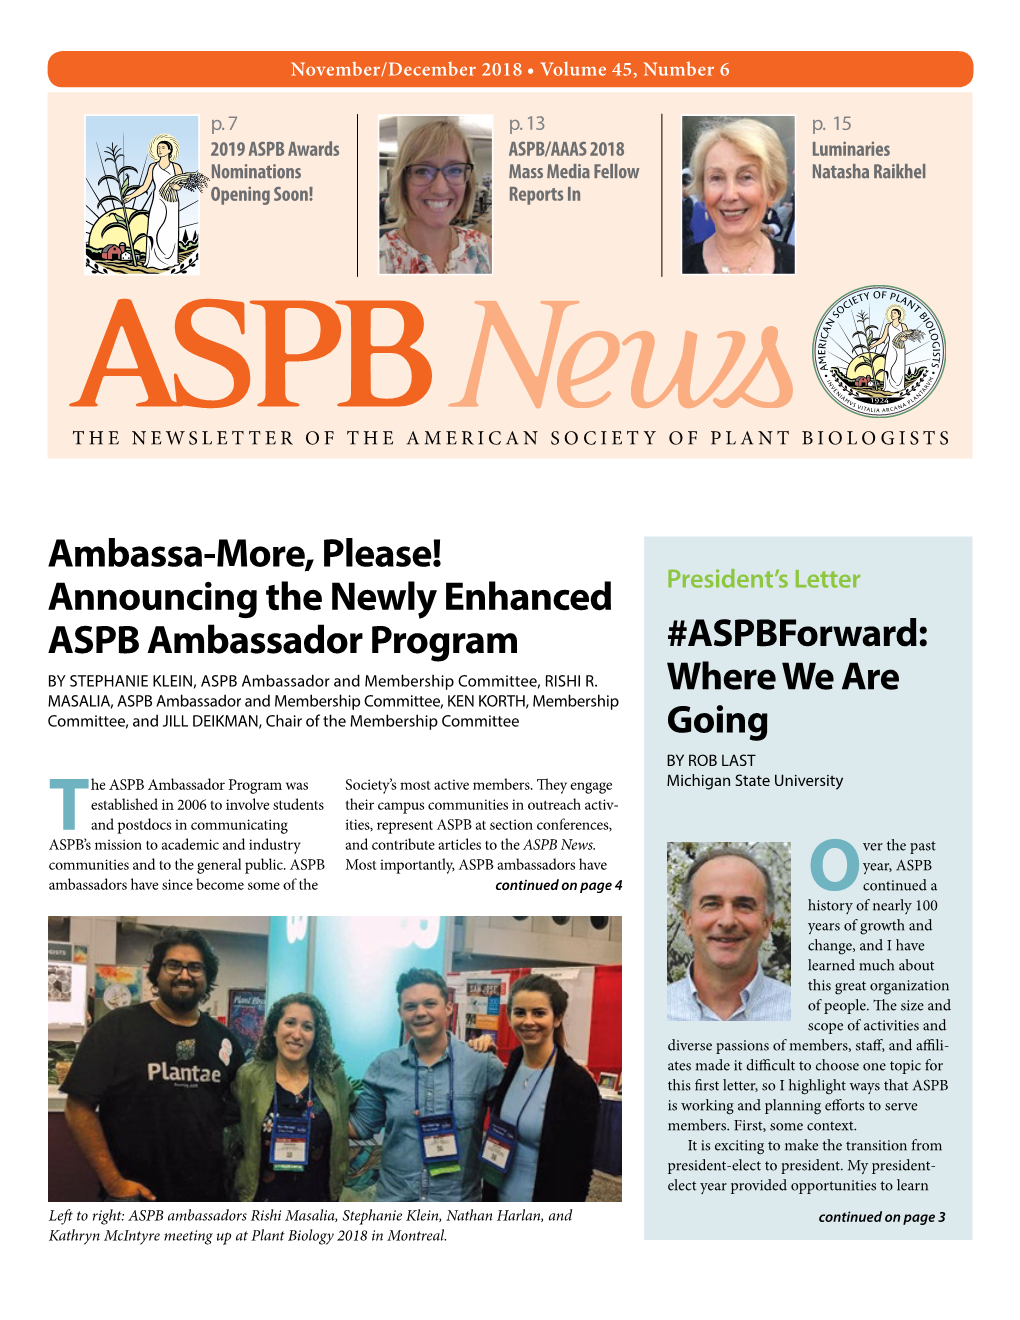 Ambassa-More, Please! Announcing the Newly Enhanced ASPB Ambassador Program